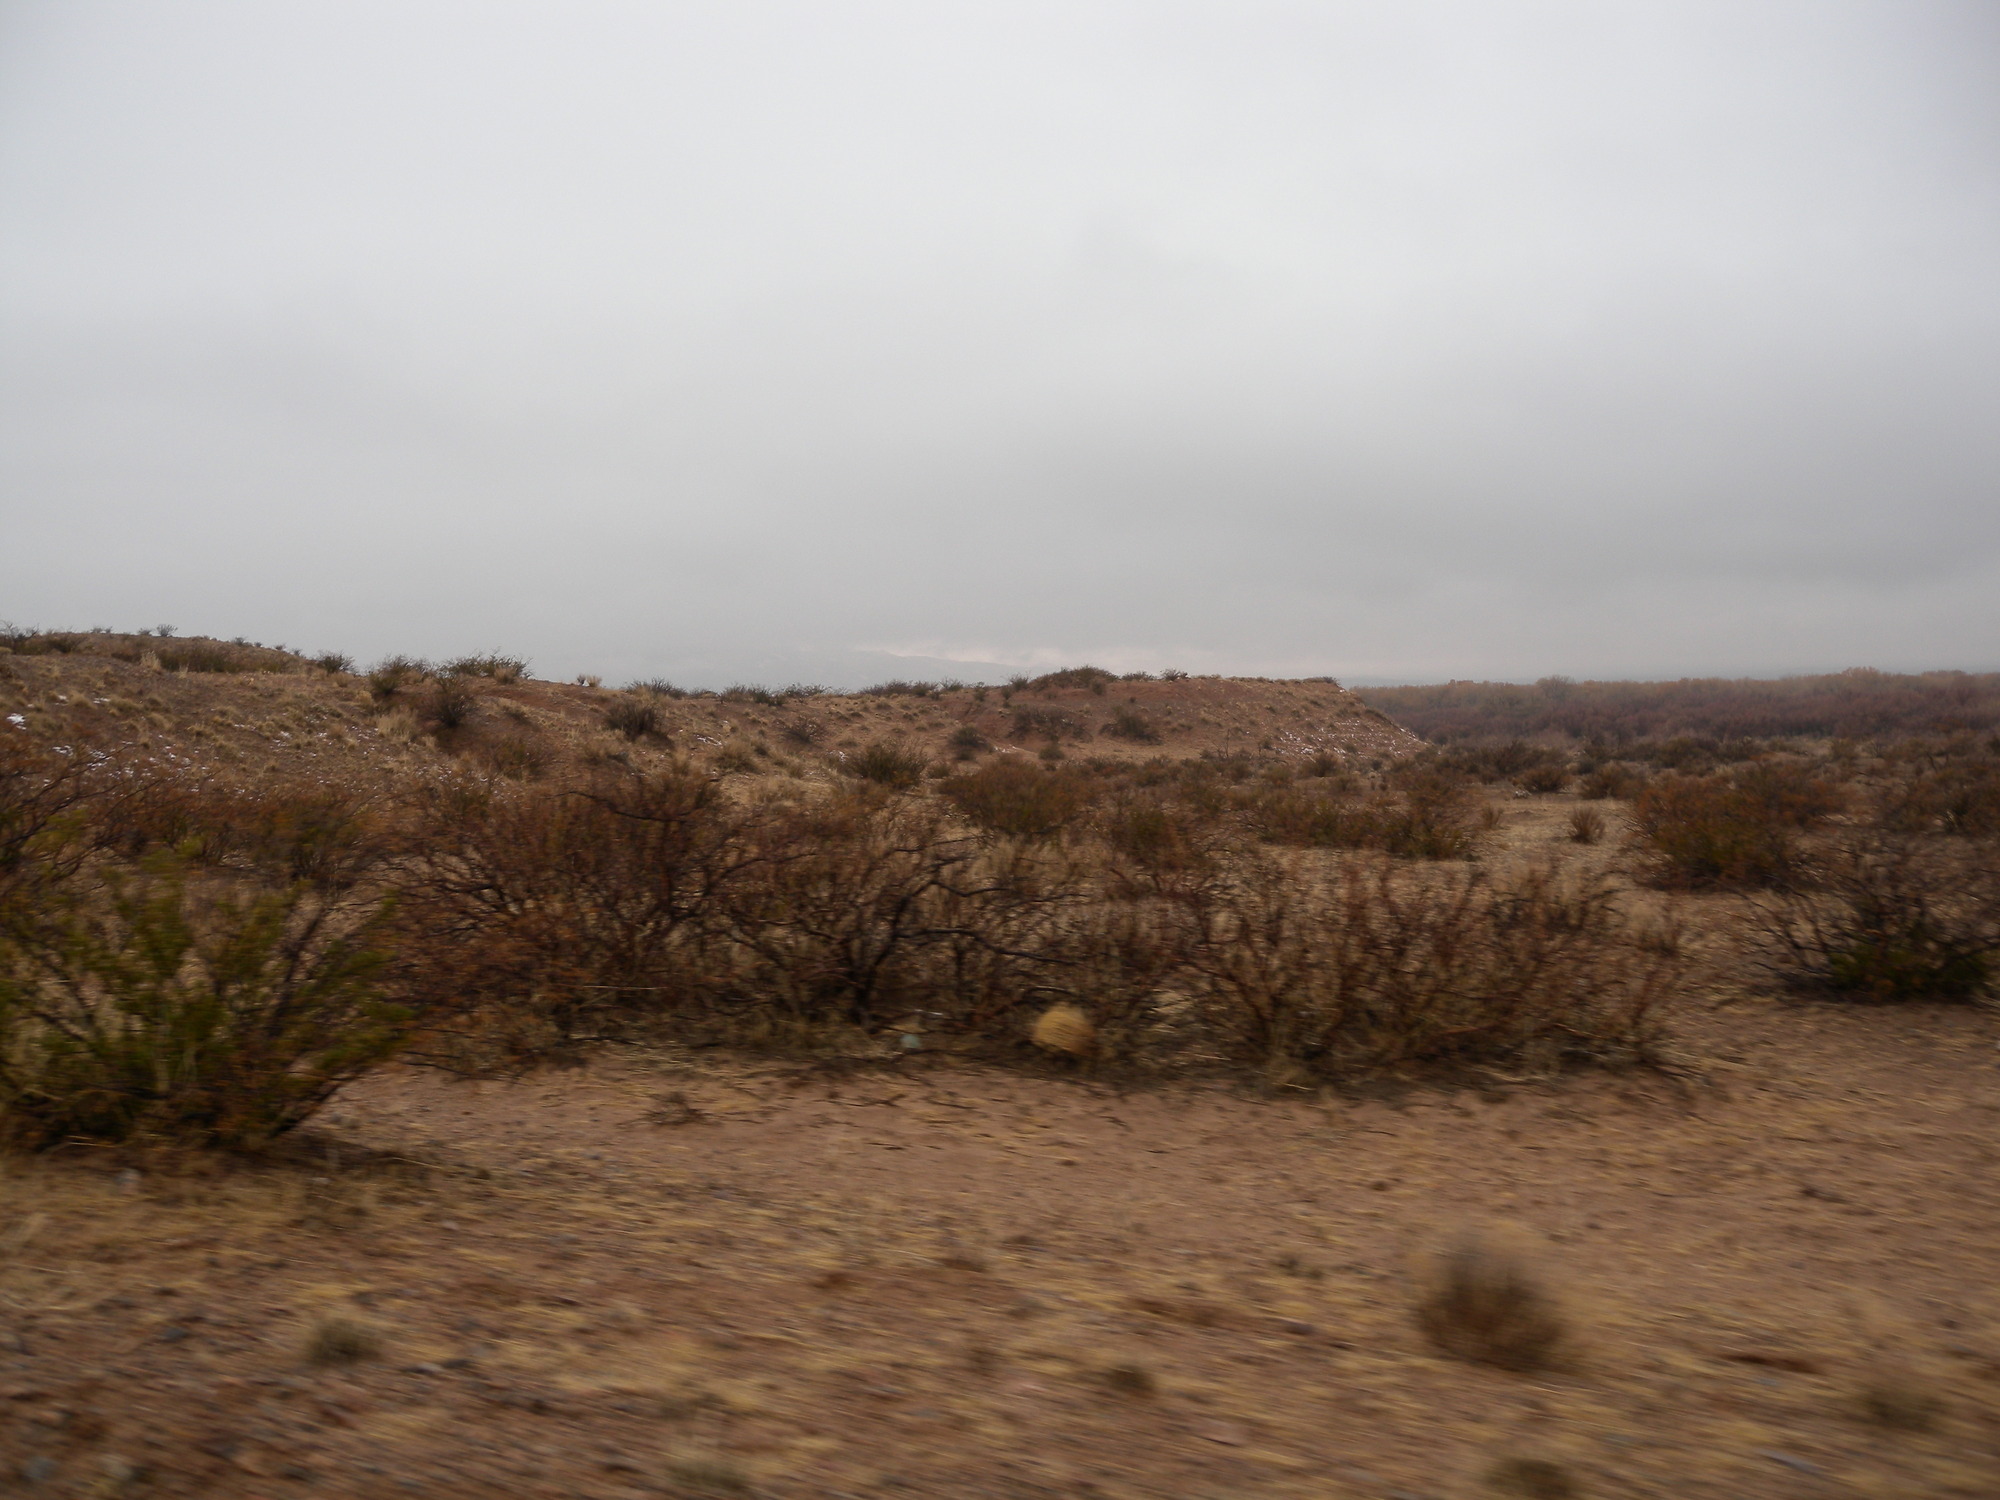 A close-up shot of a possible campsite along Bosquecito Road outside of Socorro, NM